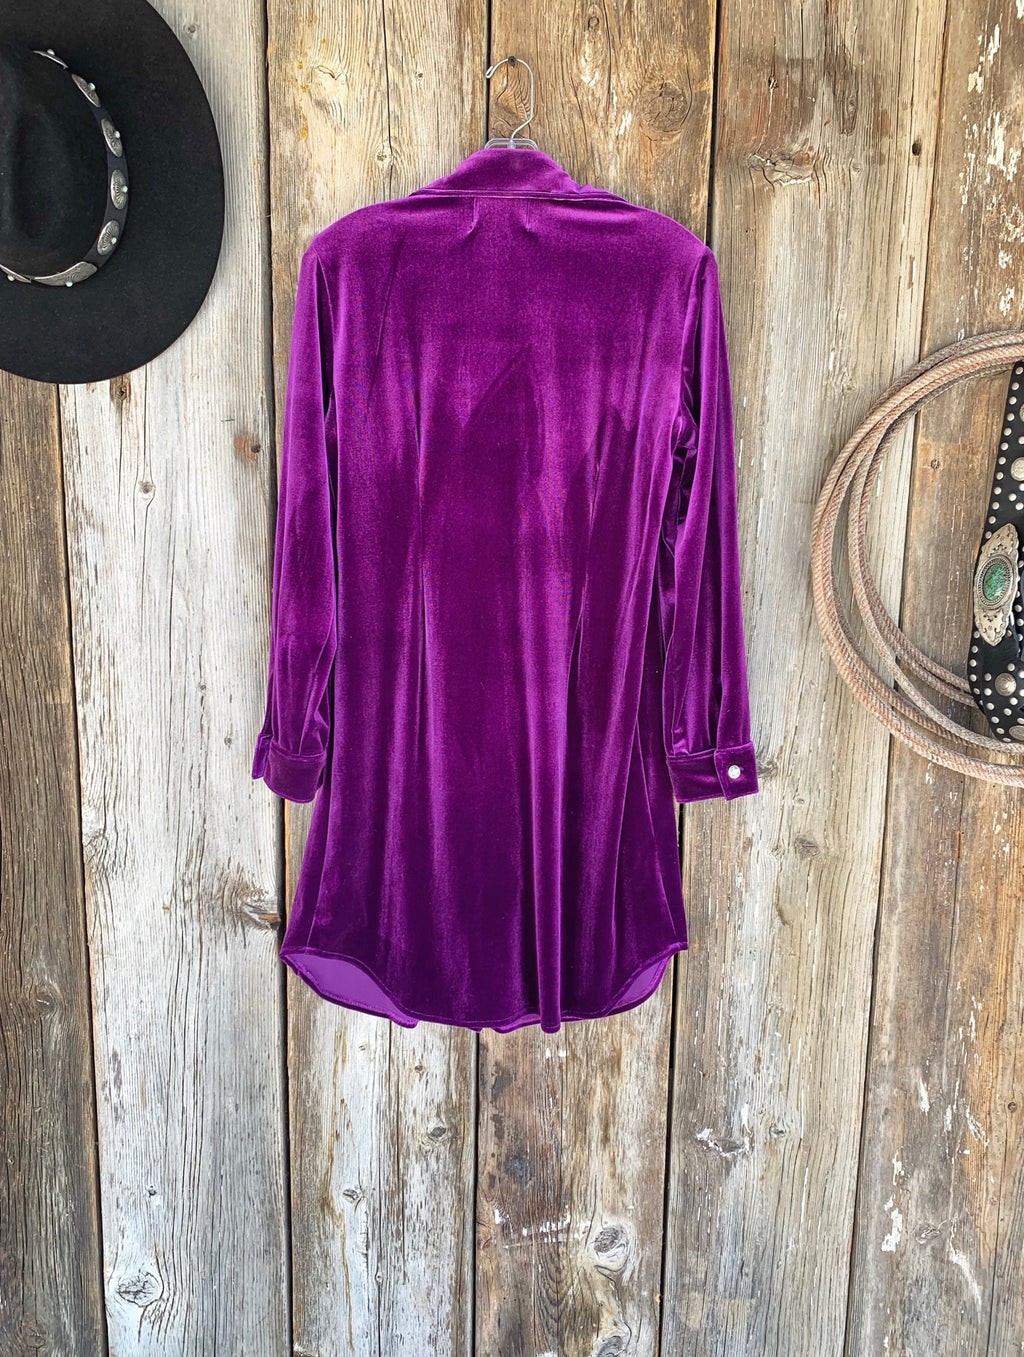 The After Party: Purple Velvet Dress